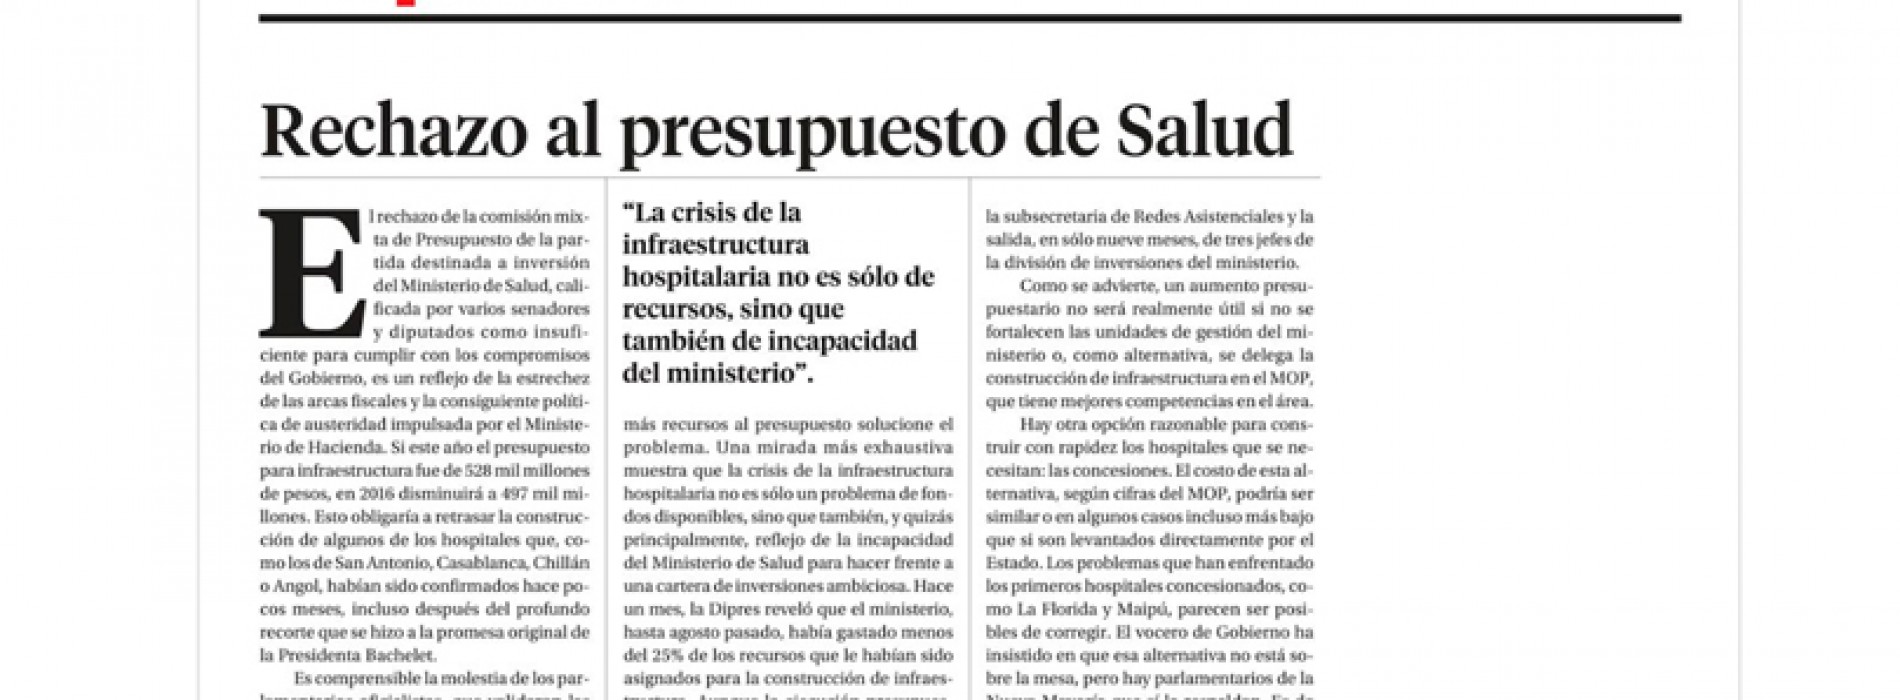 Today in La Segunda "Rejection of the health budget"